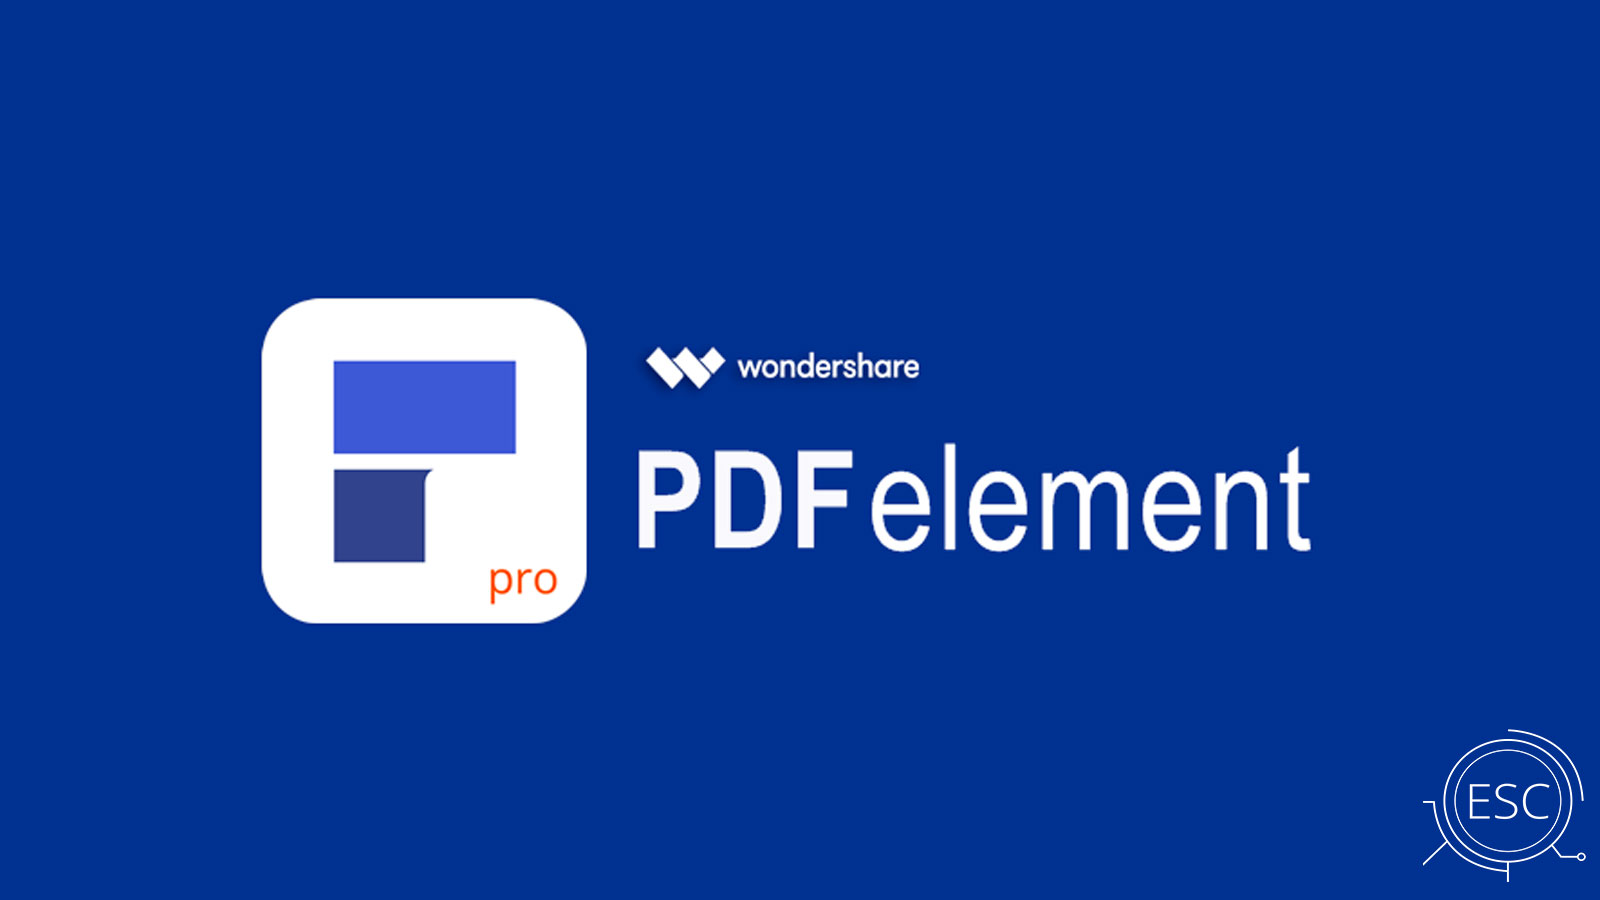 wondershare pdfelement 7 pro download